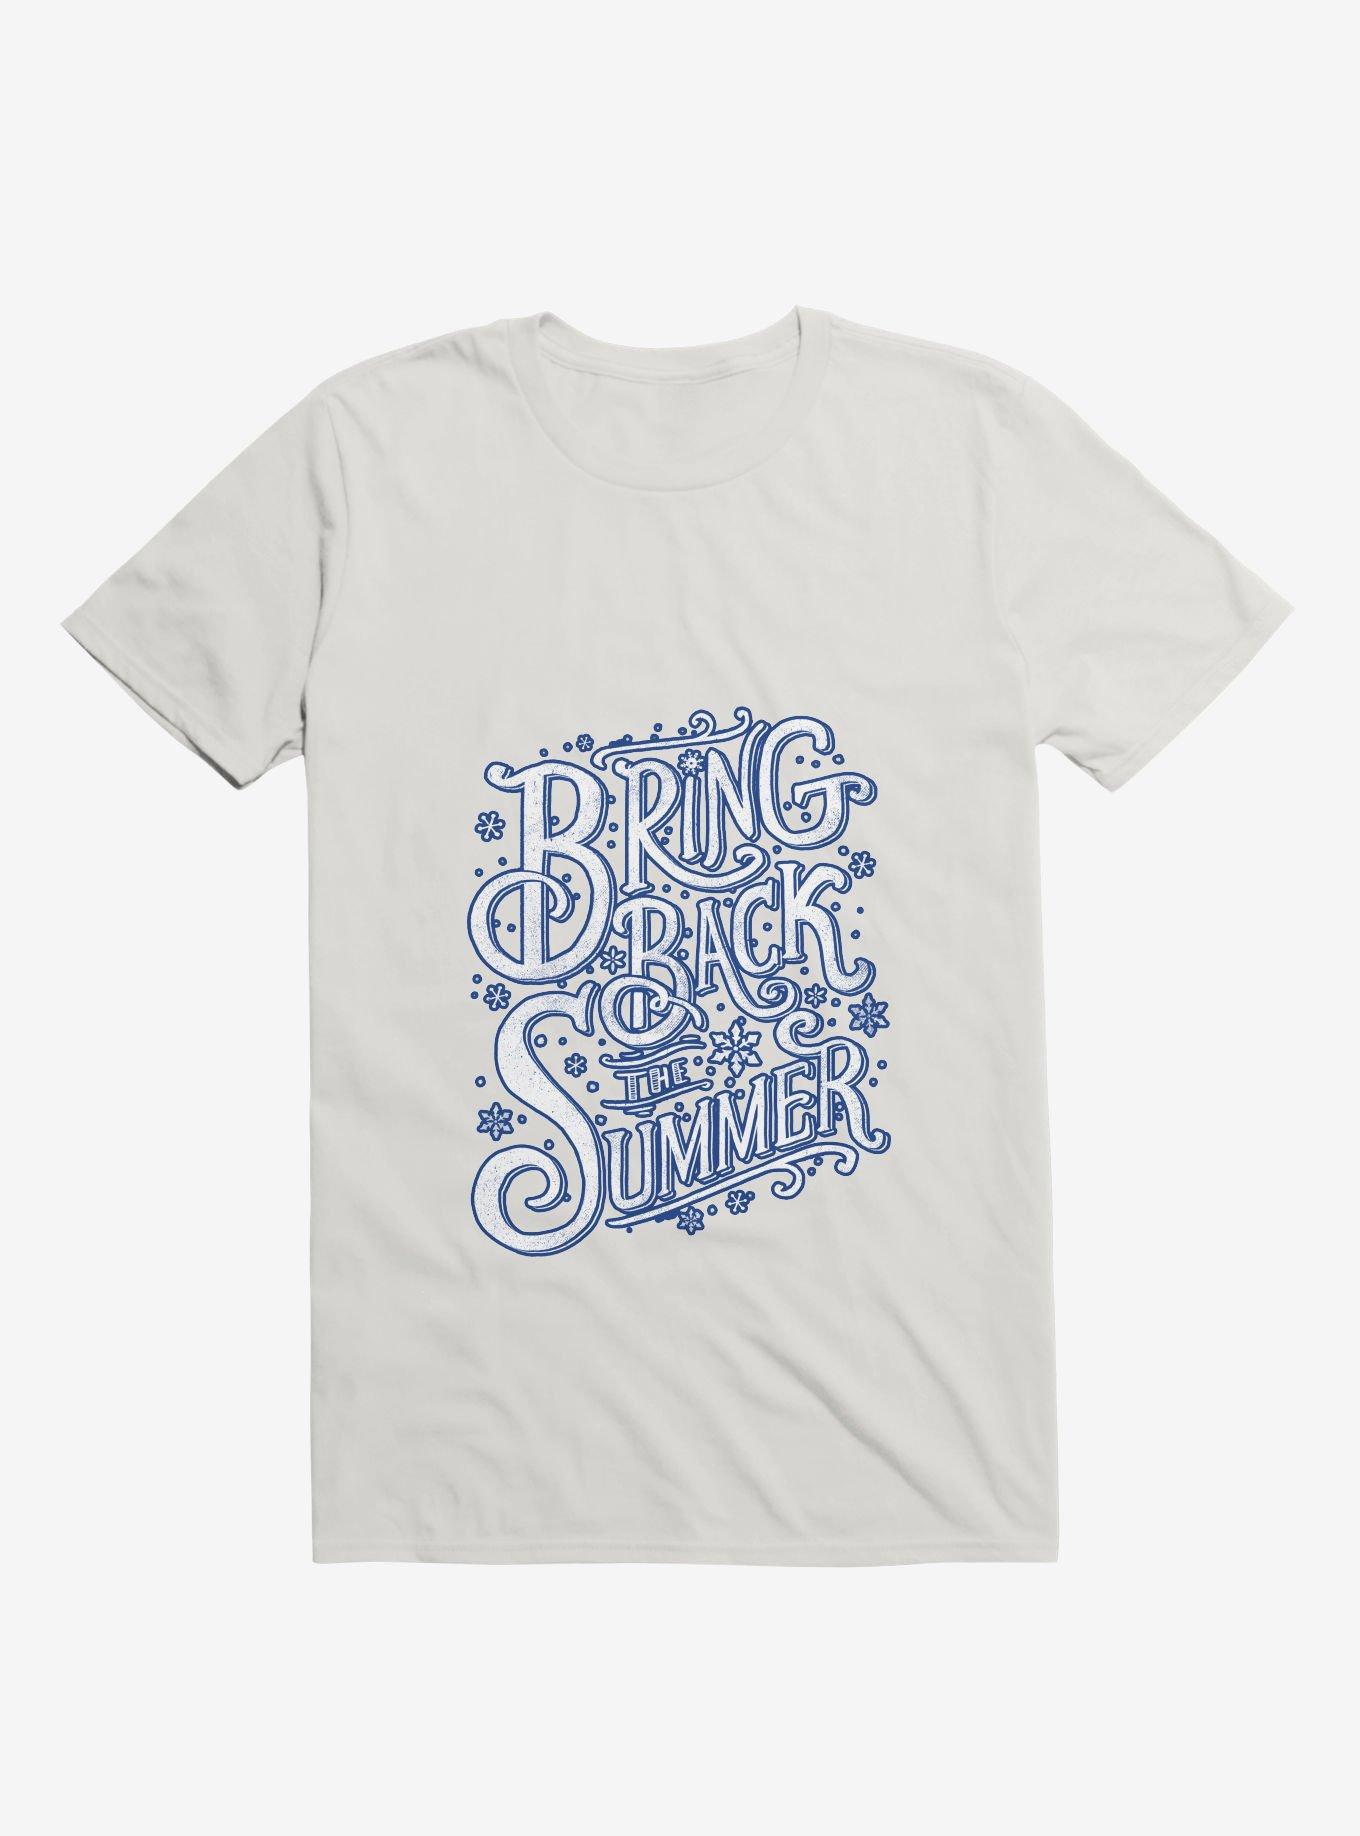 Bring Back The Summer T-Shirt, WHITE, hi-res